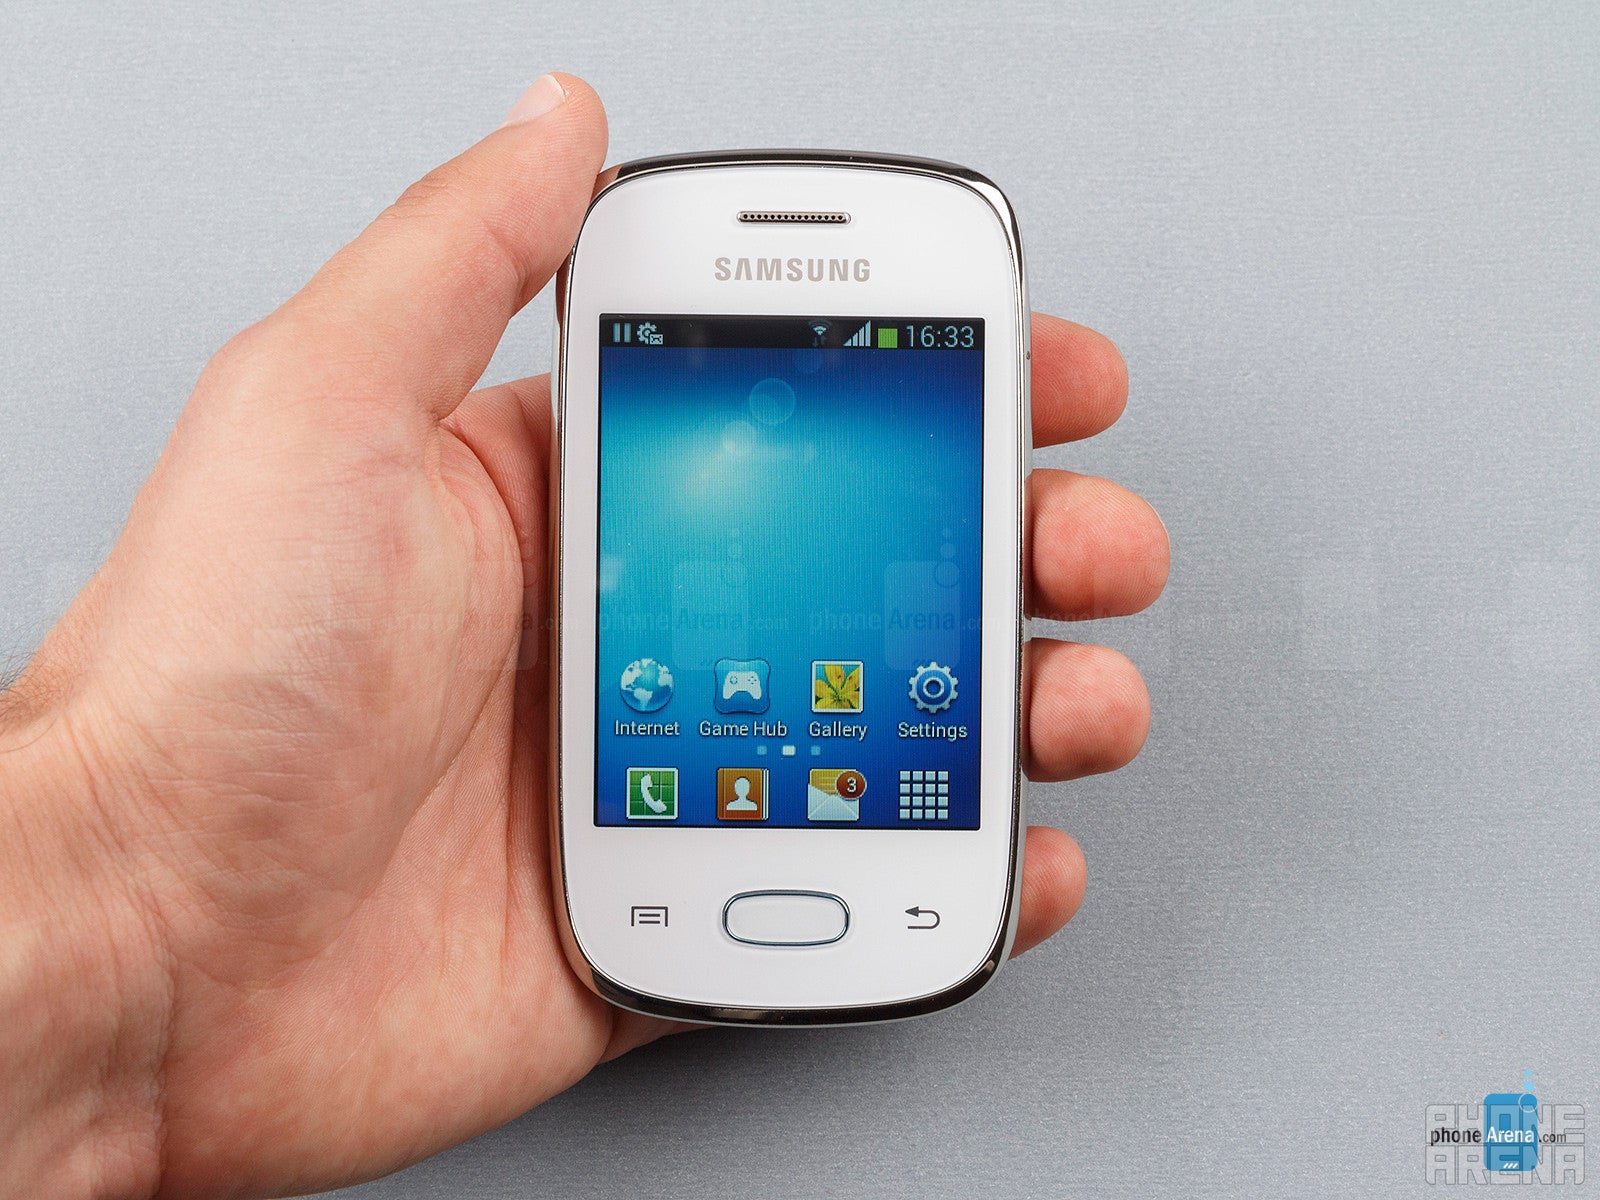 Samsung Galaxy Pocket Neo Review